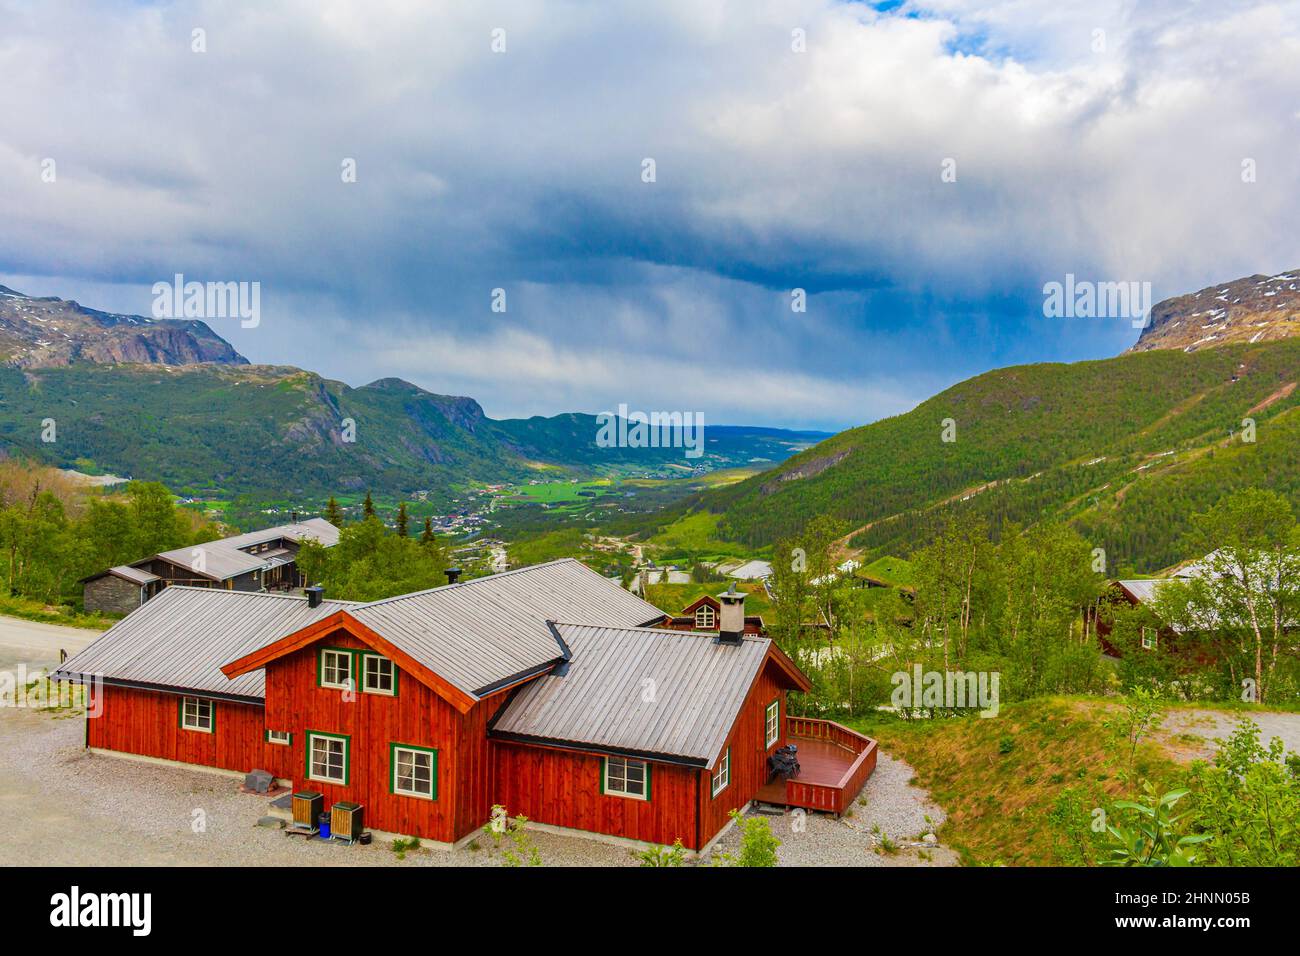 Bellissimo panorama Norvegia Hemsedal Skicenter con baita e capanne Montagne. Foto Stock